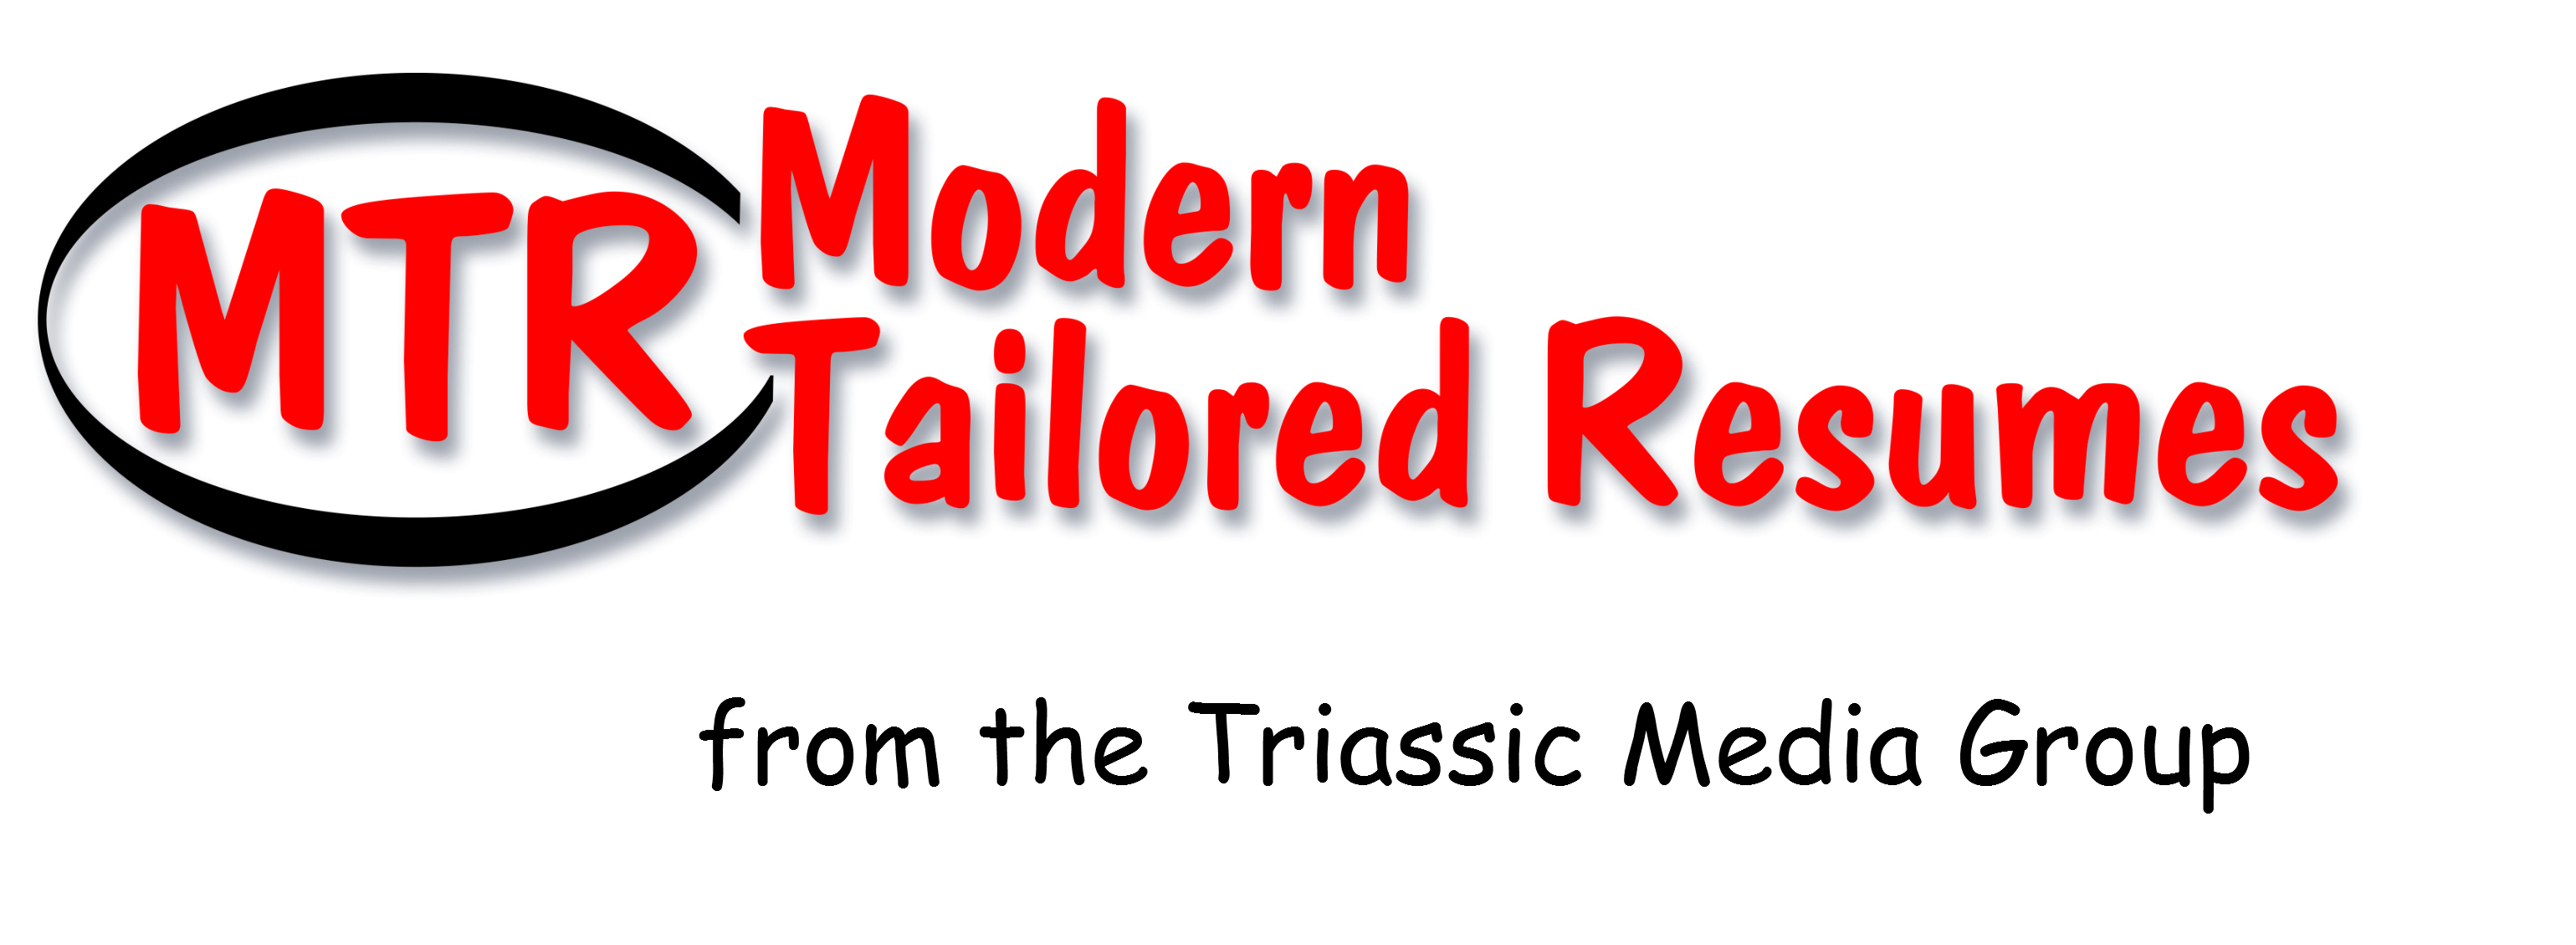 Modern Tailored Resumes